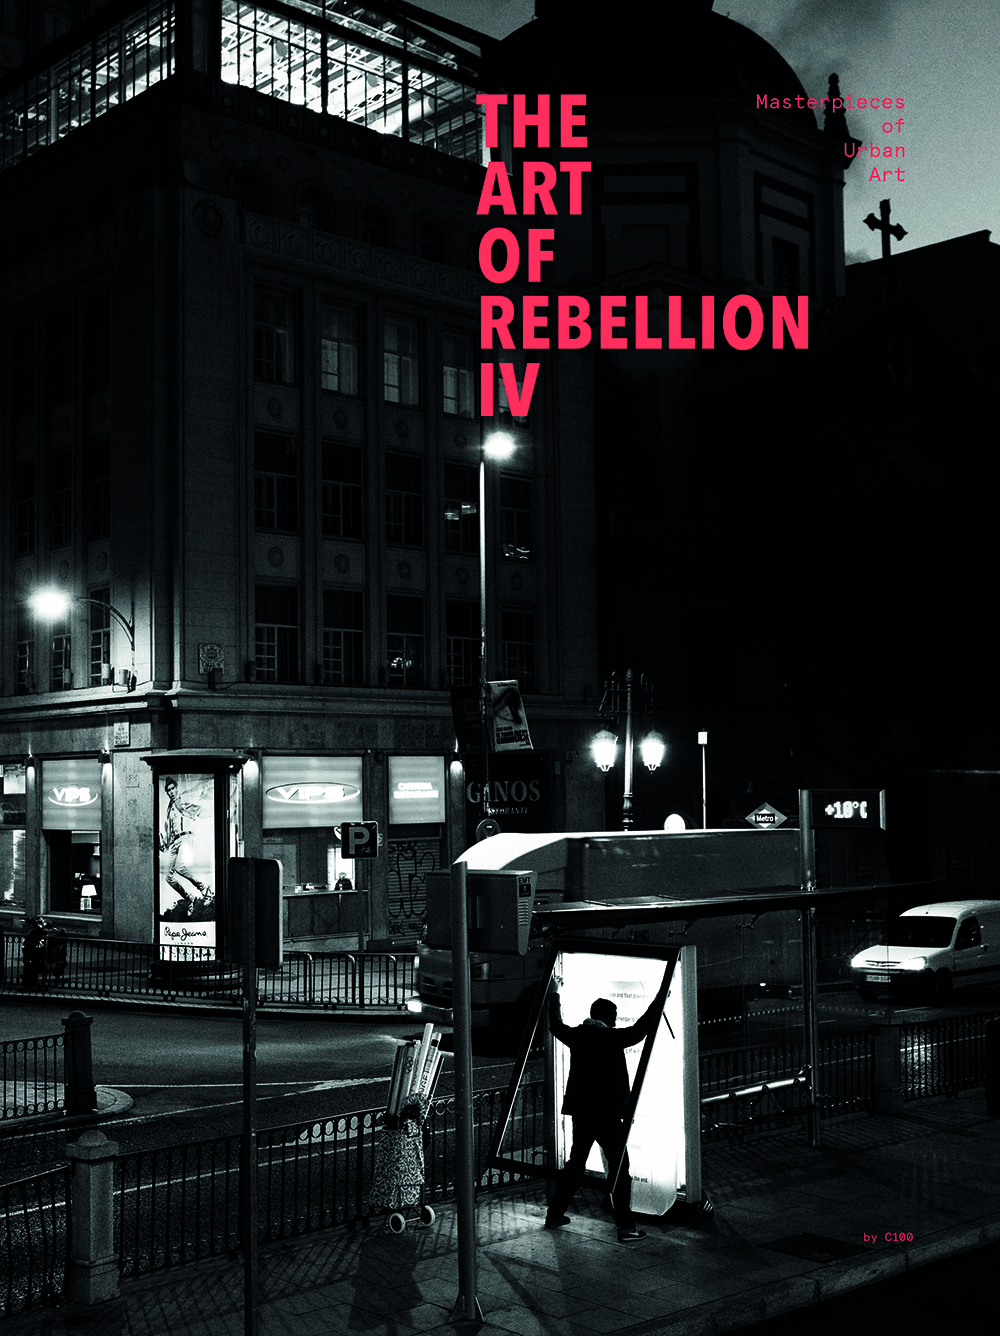 The Art of Rebellion IV - Masterpieces of Urban Art